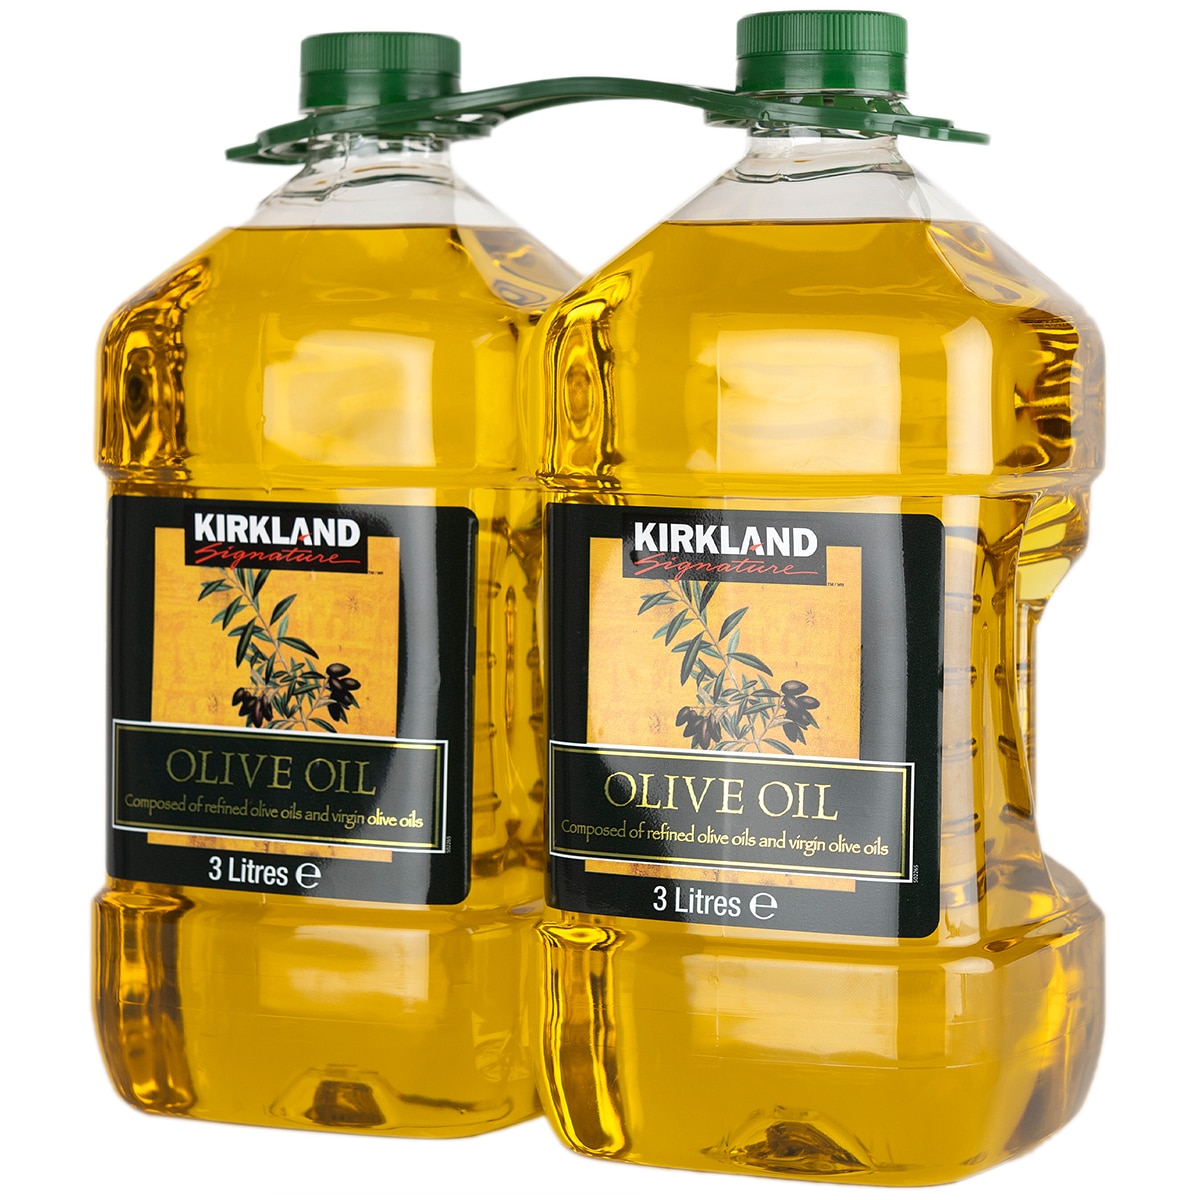 Kirkland Signature Olive Oil 2 x 3 Litres Costco Australia